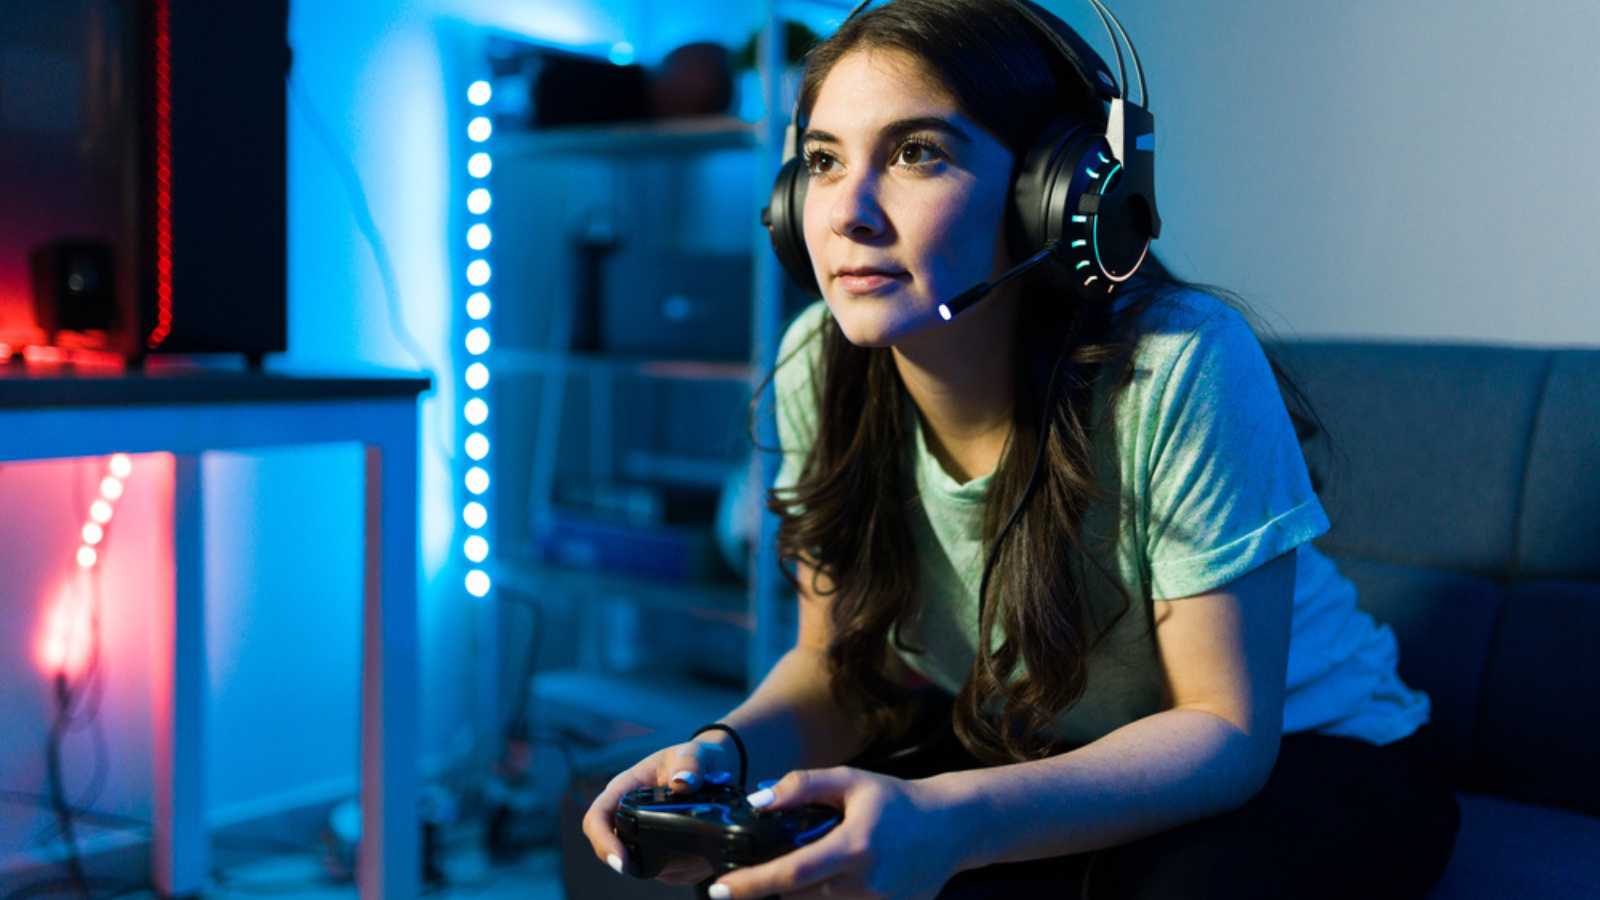 Girl Playing Video Game